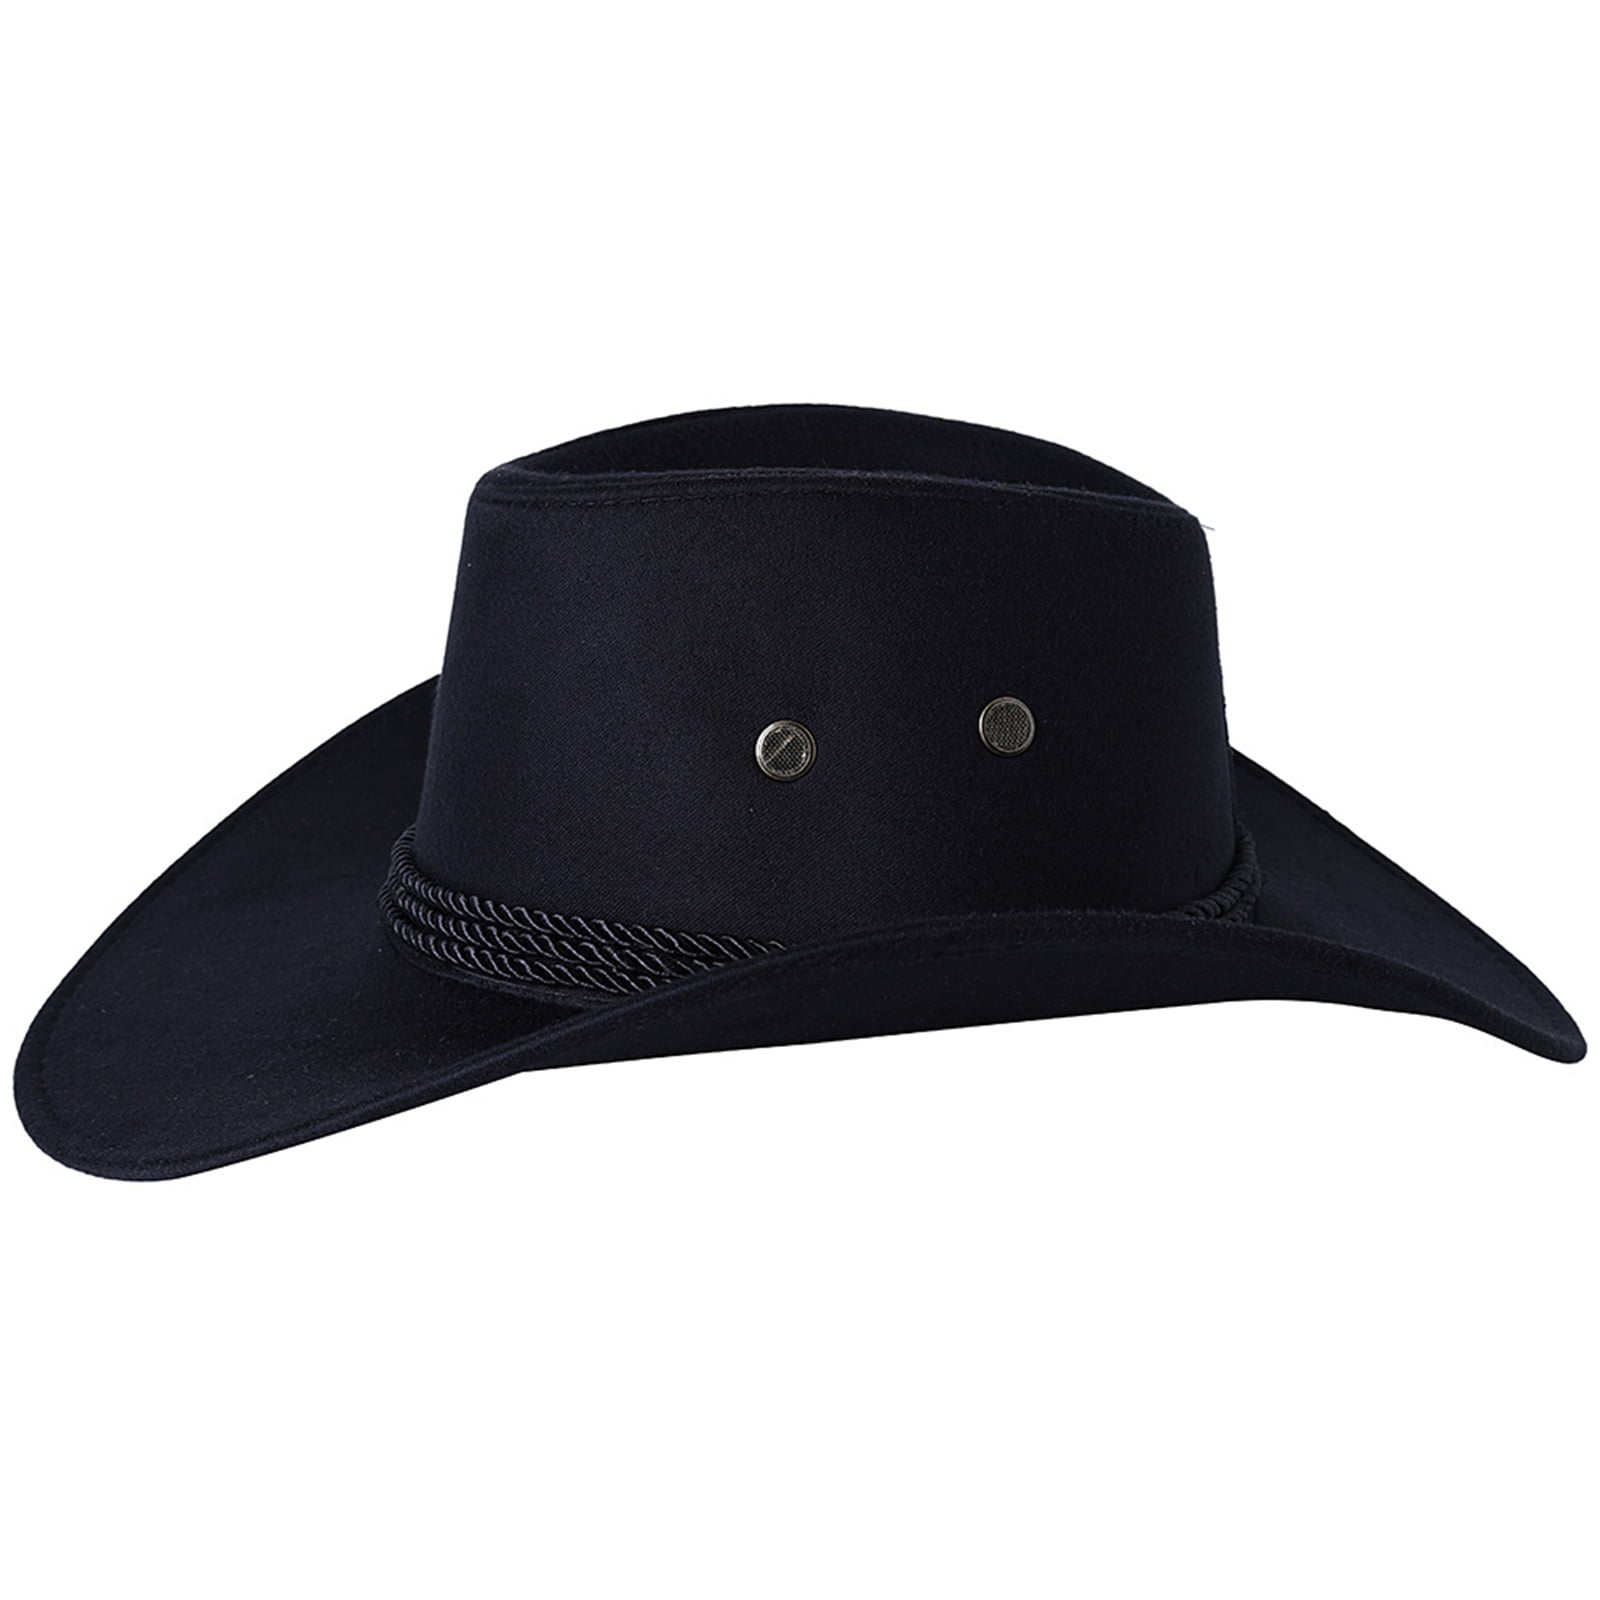 Yilvust Cowboy Hats for Women Men Faux Felt Vintage Western Cowboy Hat Adjustable Adult Wide Brim Hat with Strap, Women's, Size: One size, Beige